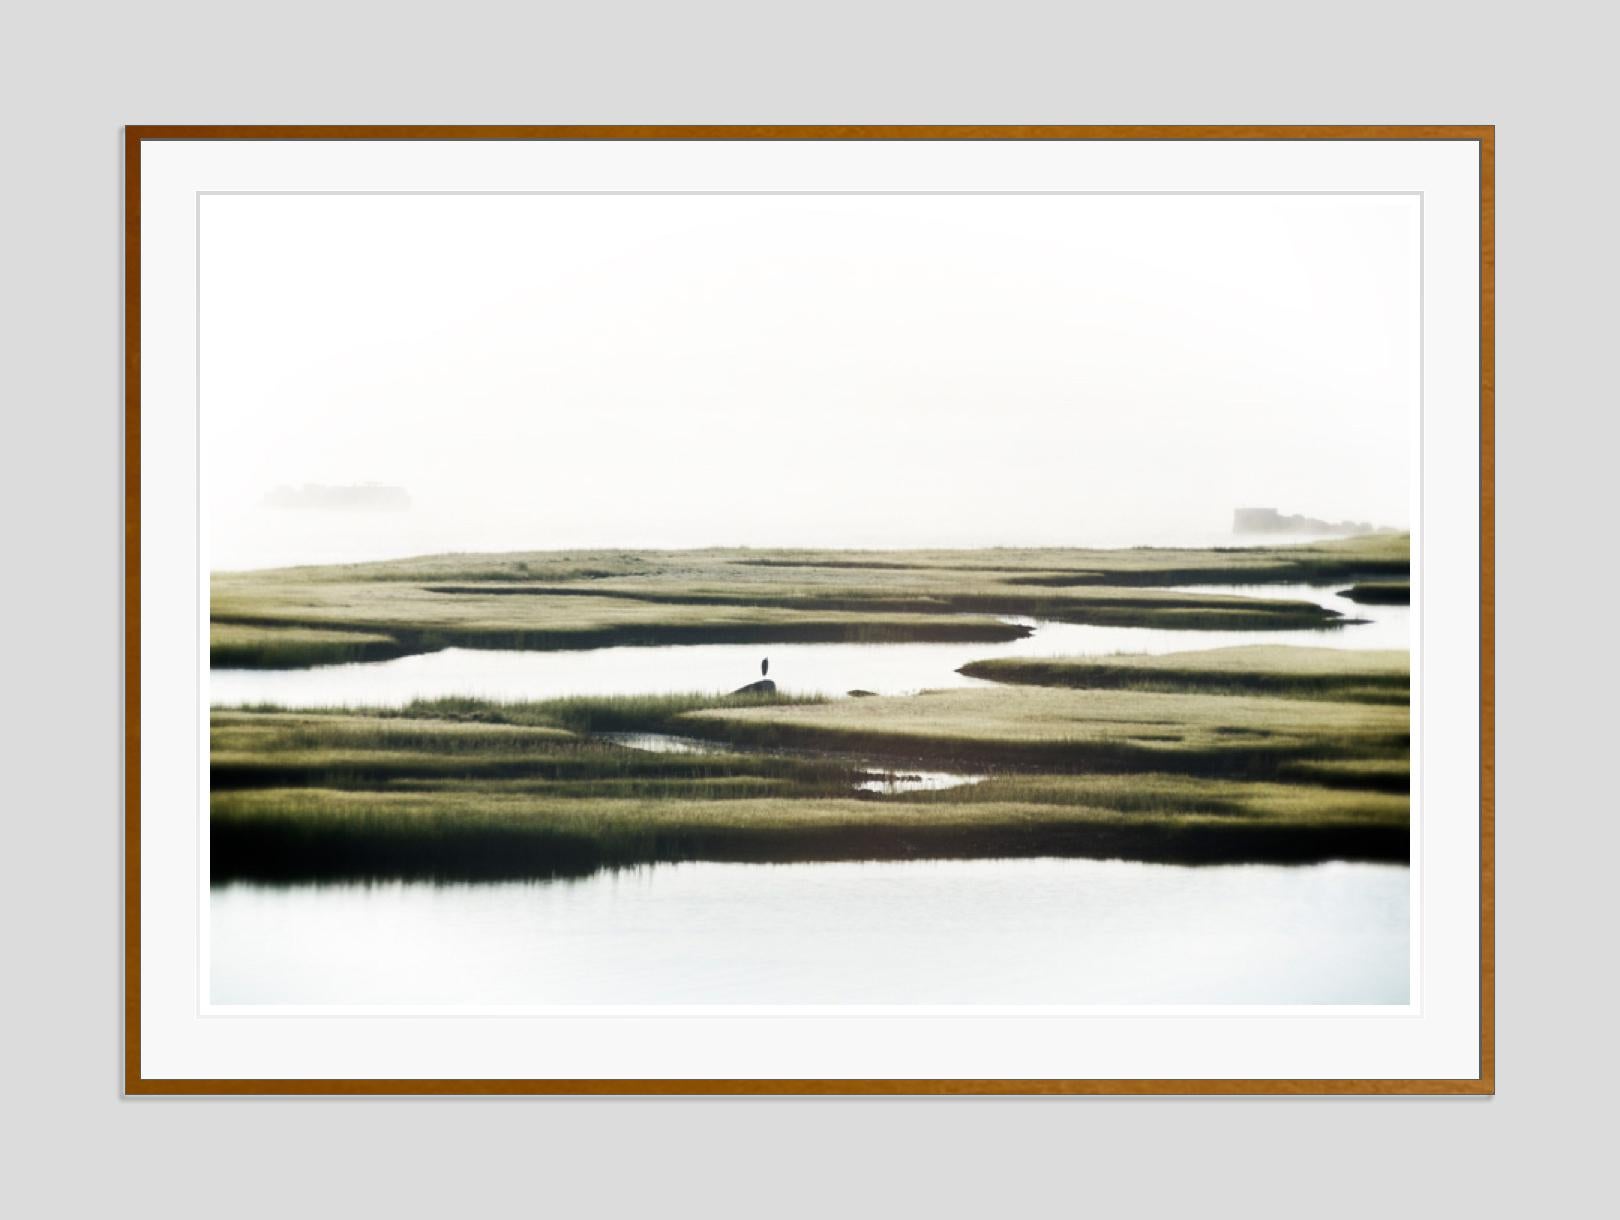 Massachusetts Mist -  Oversize Signed Limited Edition Print  - Modern Photograph by Stuart Möller